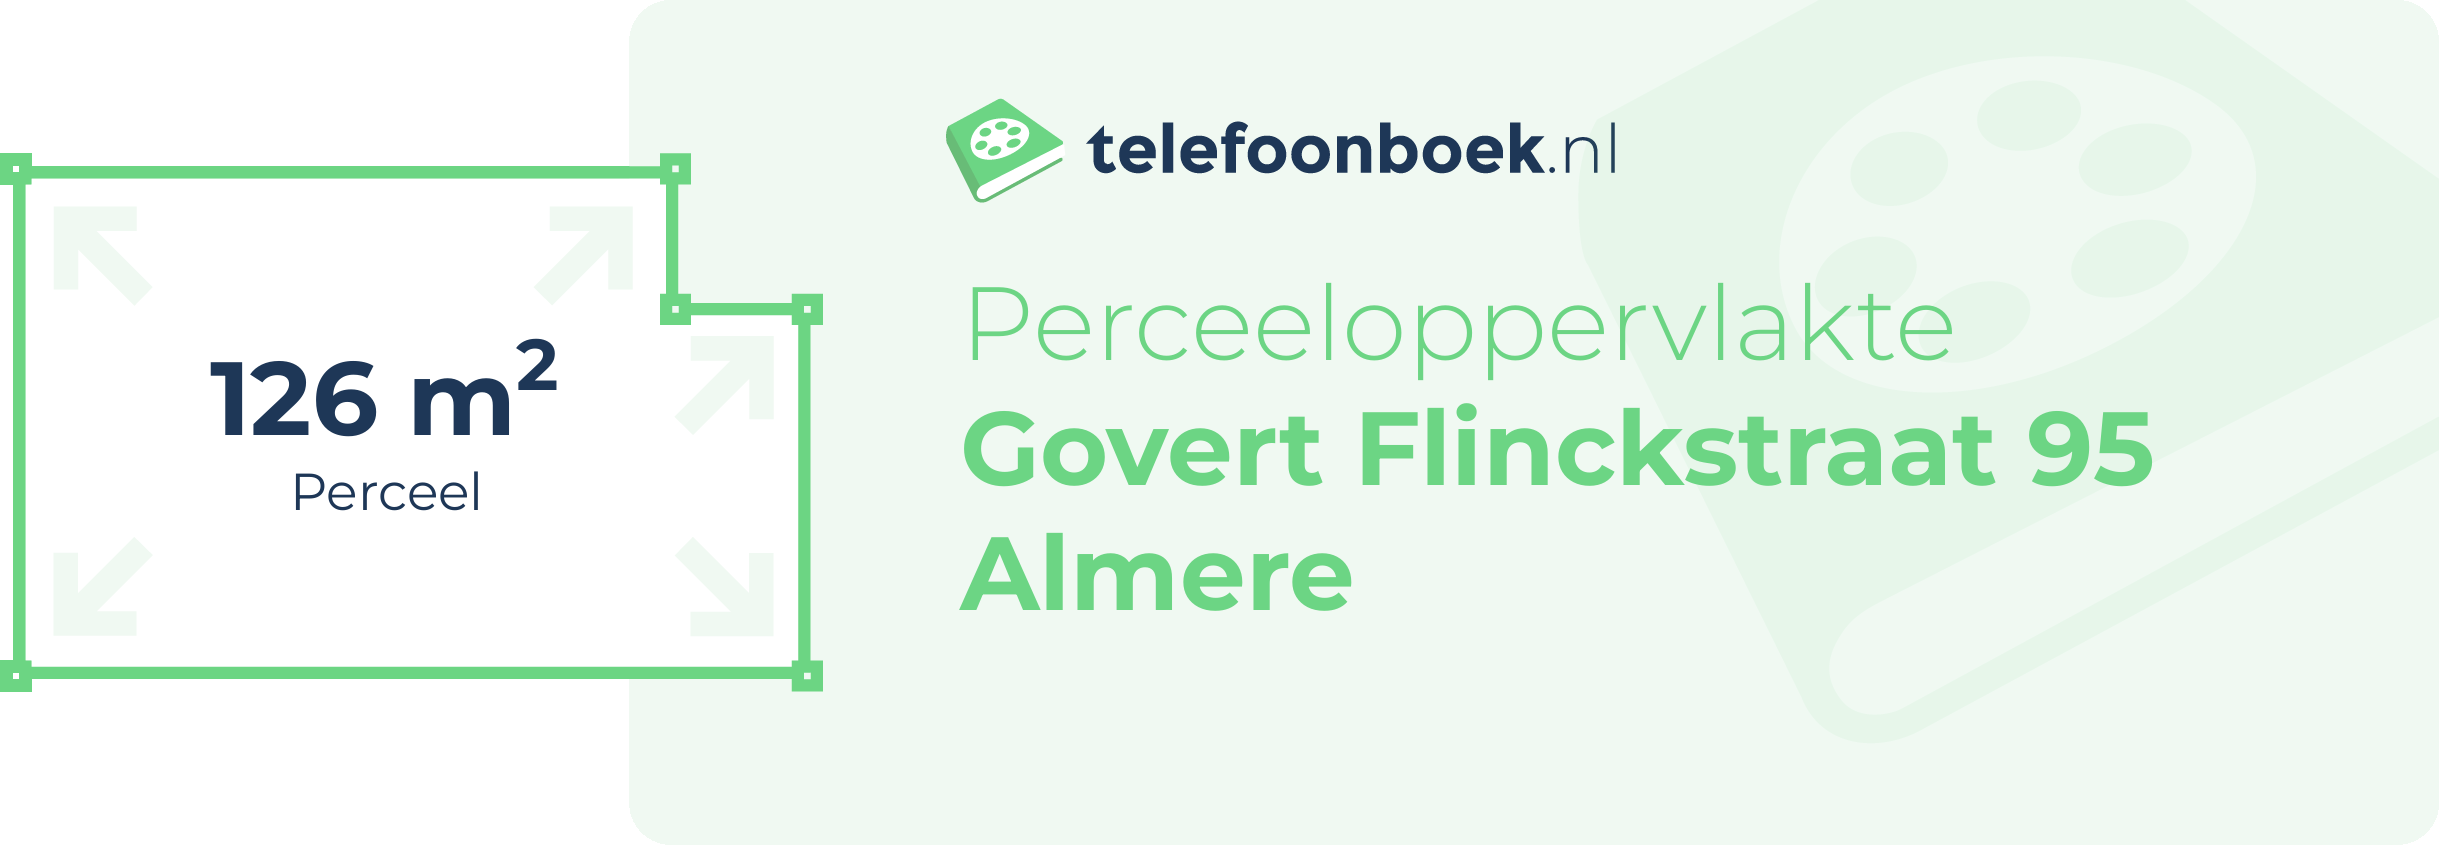 Perceeloppervlakte Govert Flinckstraat 95 Almere